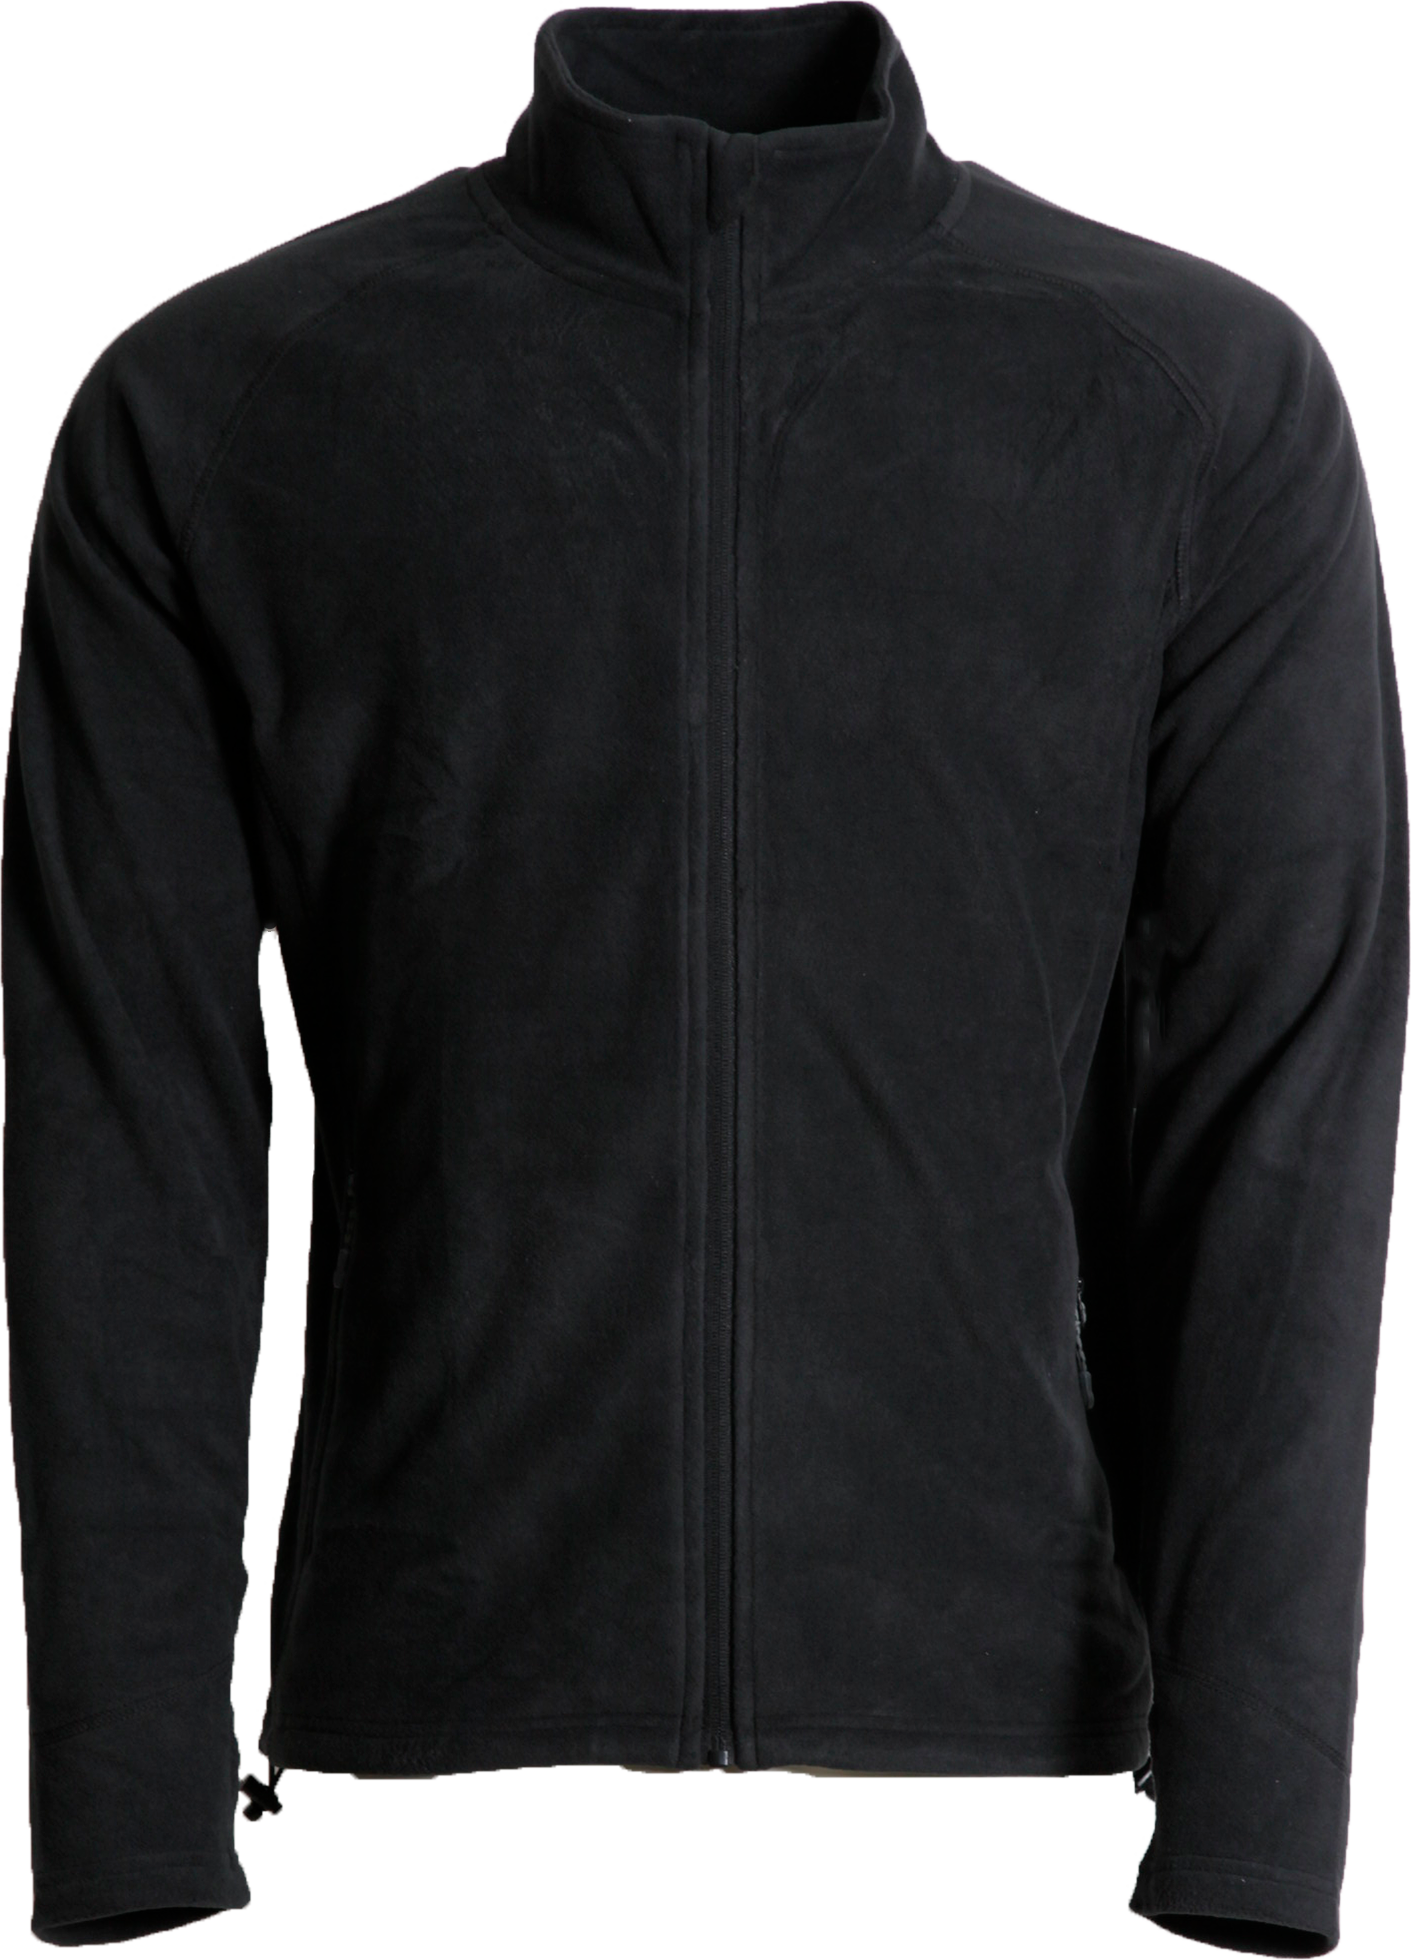 Dobsom Men’s Pescara Fleece Jacket Black